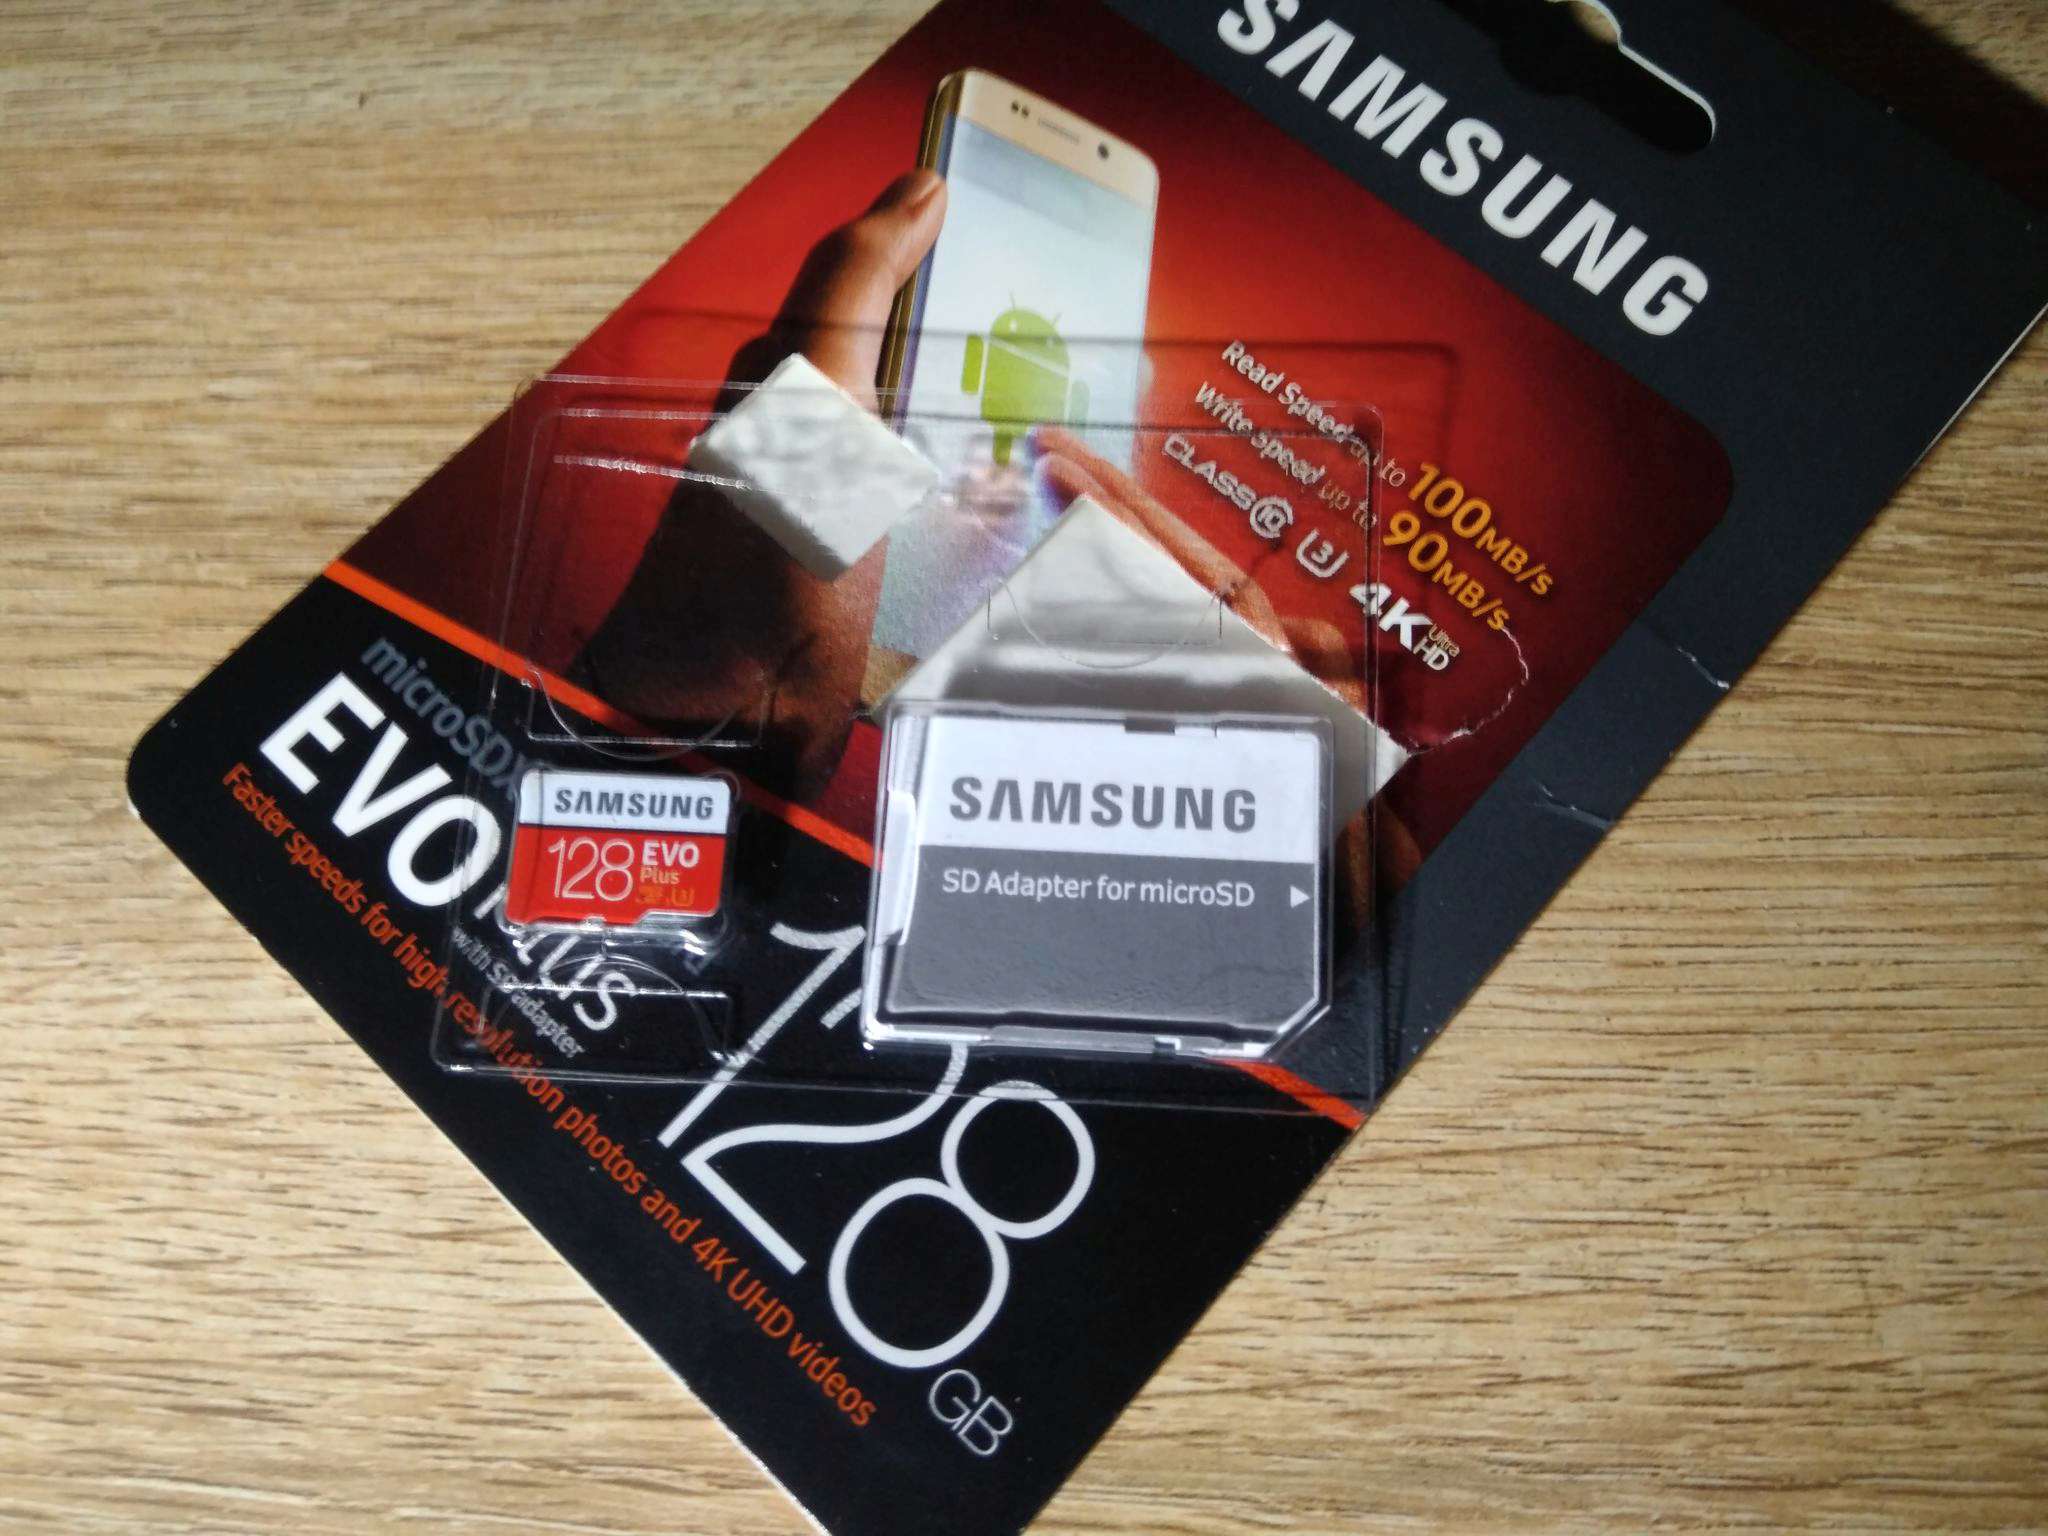 Microsdxc samsung 128gb. Samsung EVO Plus 128 u3. Samsung EVO Plus 128gb. Samsung EVO 128gb. Samsung MICROSDXC EVO Plus UHS-I.